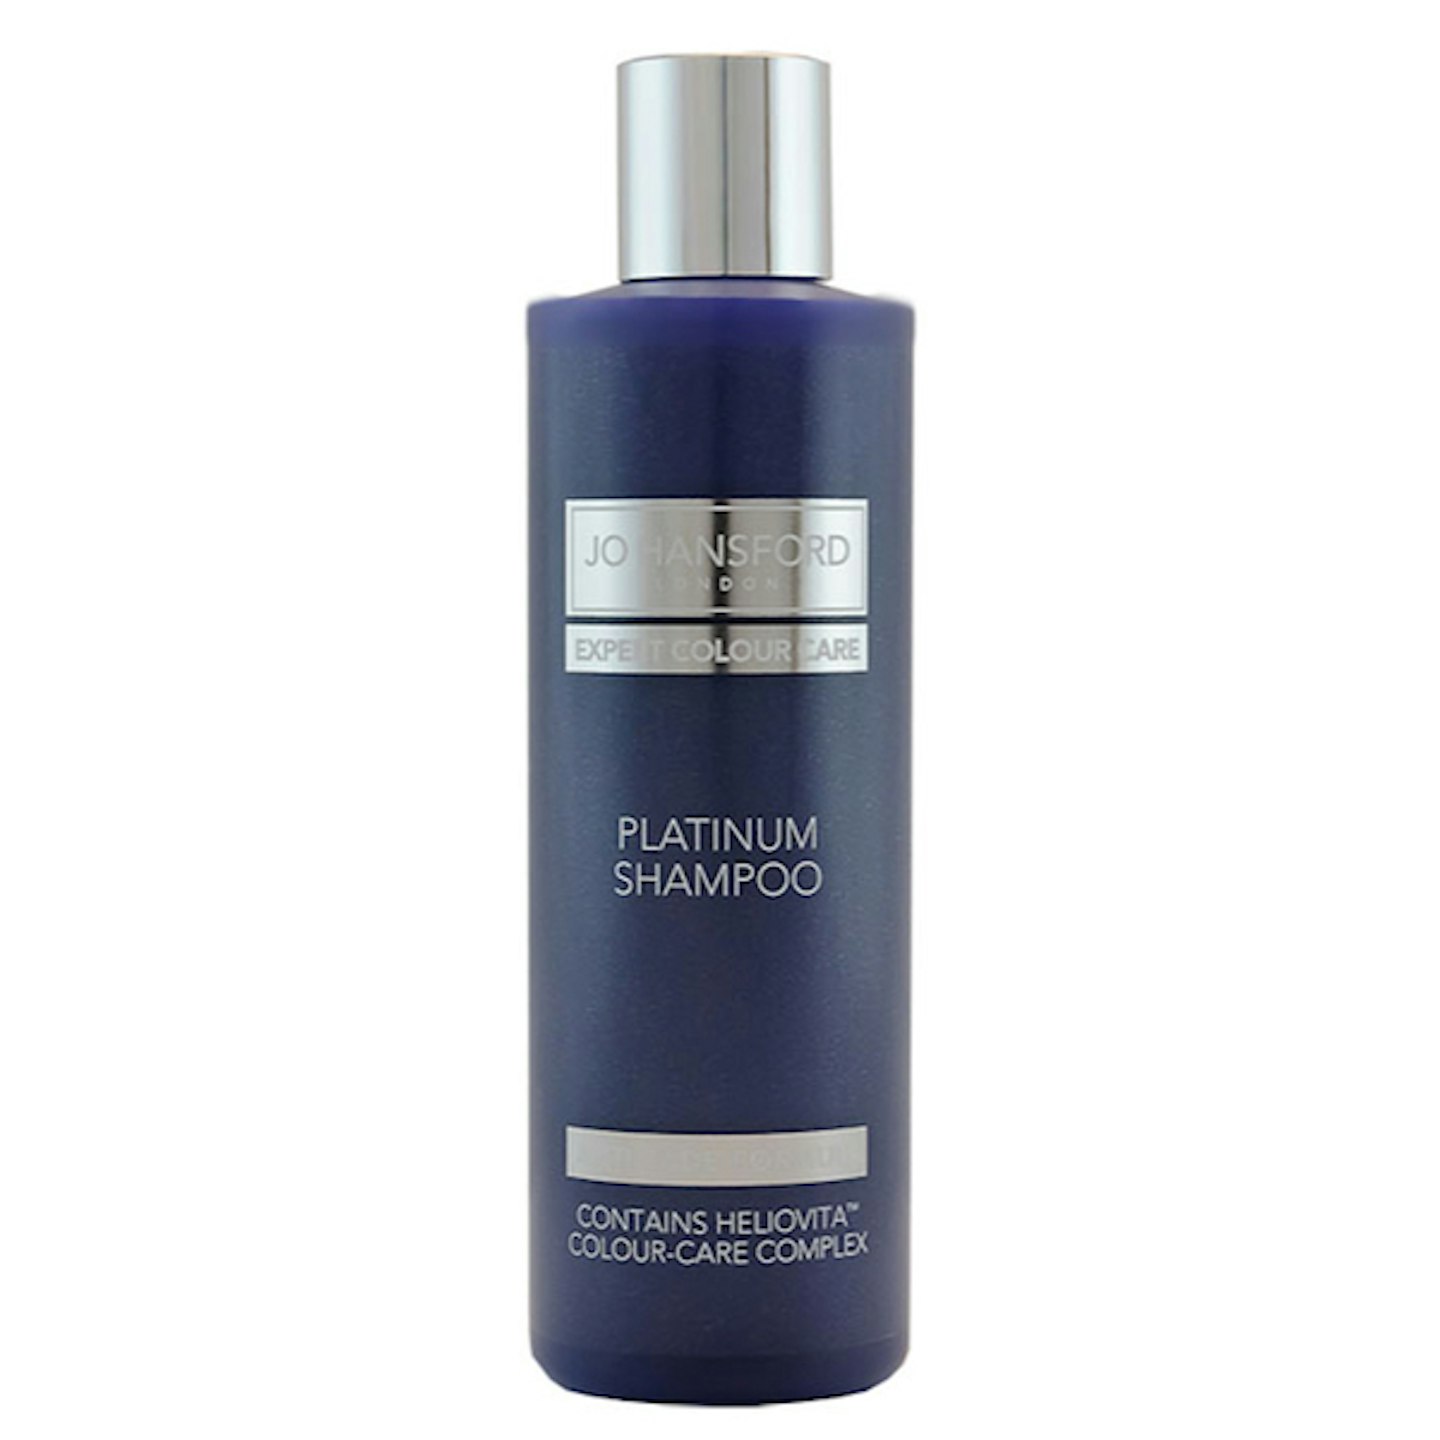 Jo Hansford Platinum Shampoo